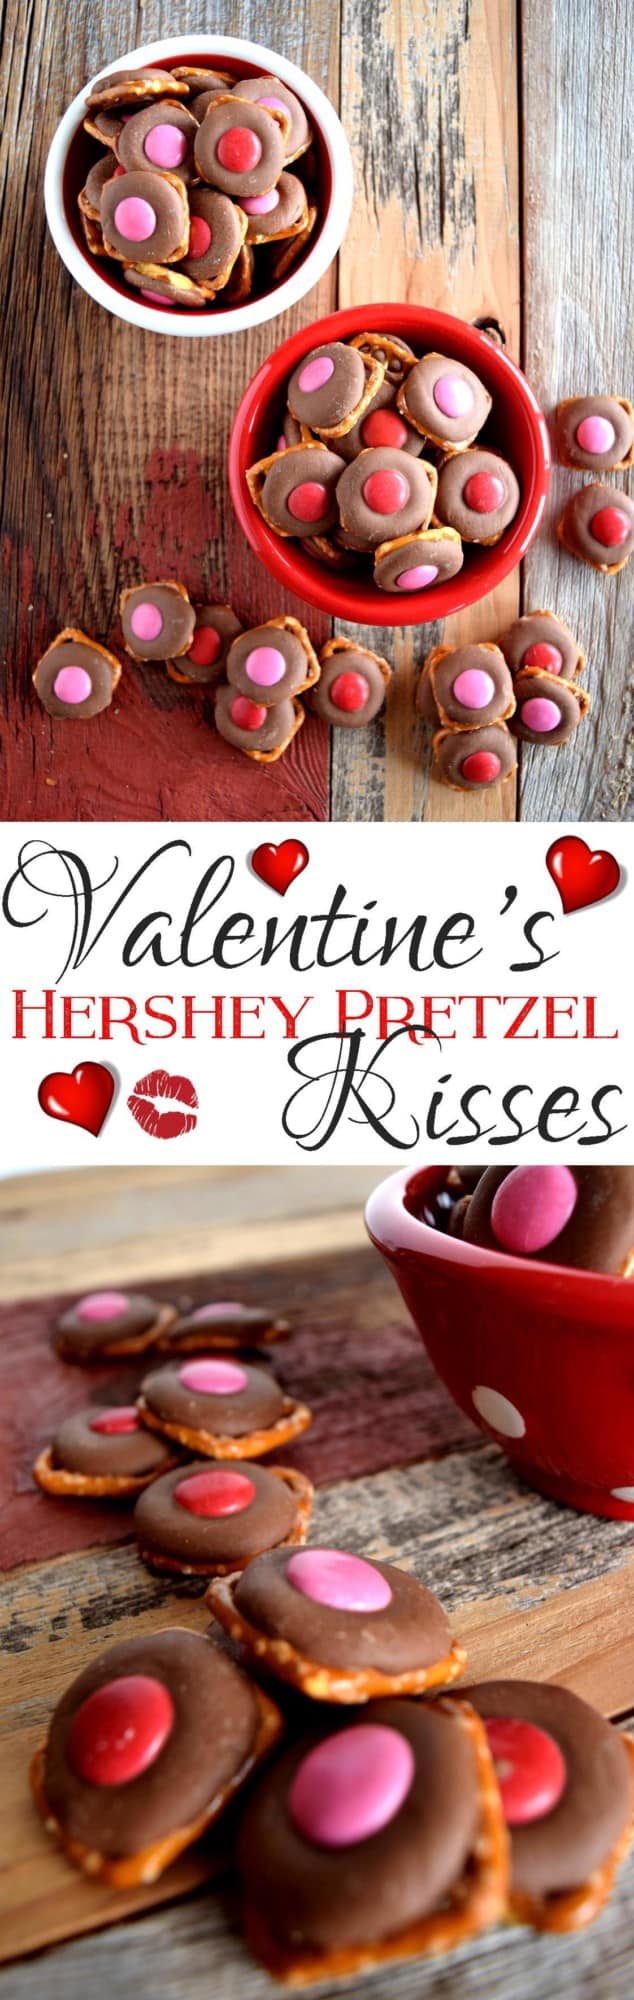 Valentine's Hershey Pretzel Kisses